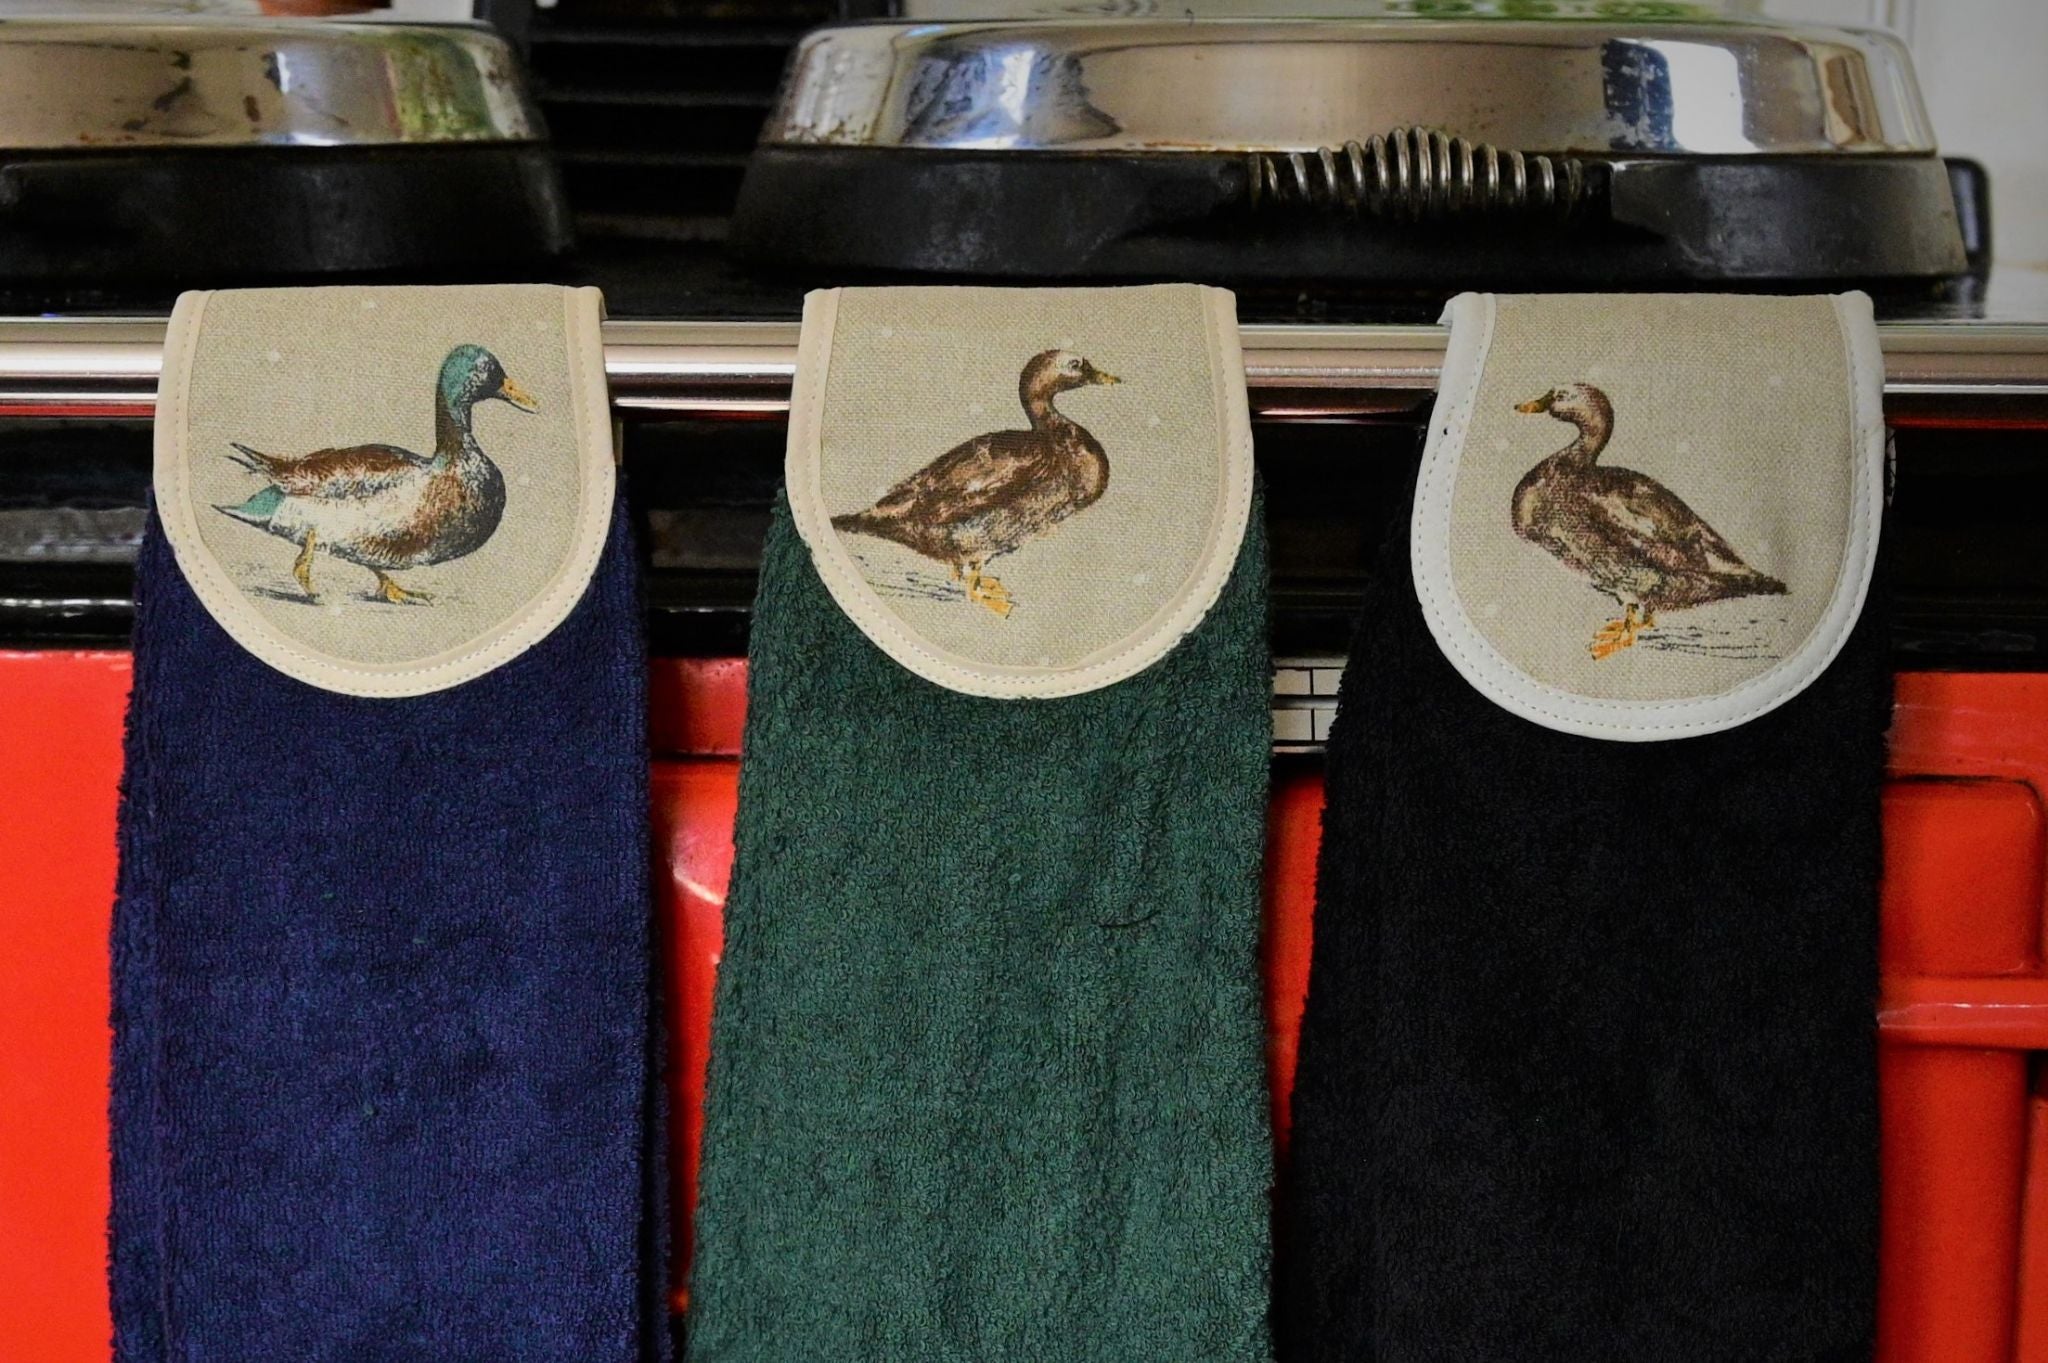 Hang ups, Kitchen towels, Ducks on Green, Navy Blue or Black Towel